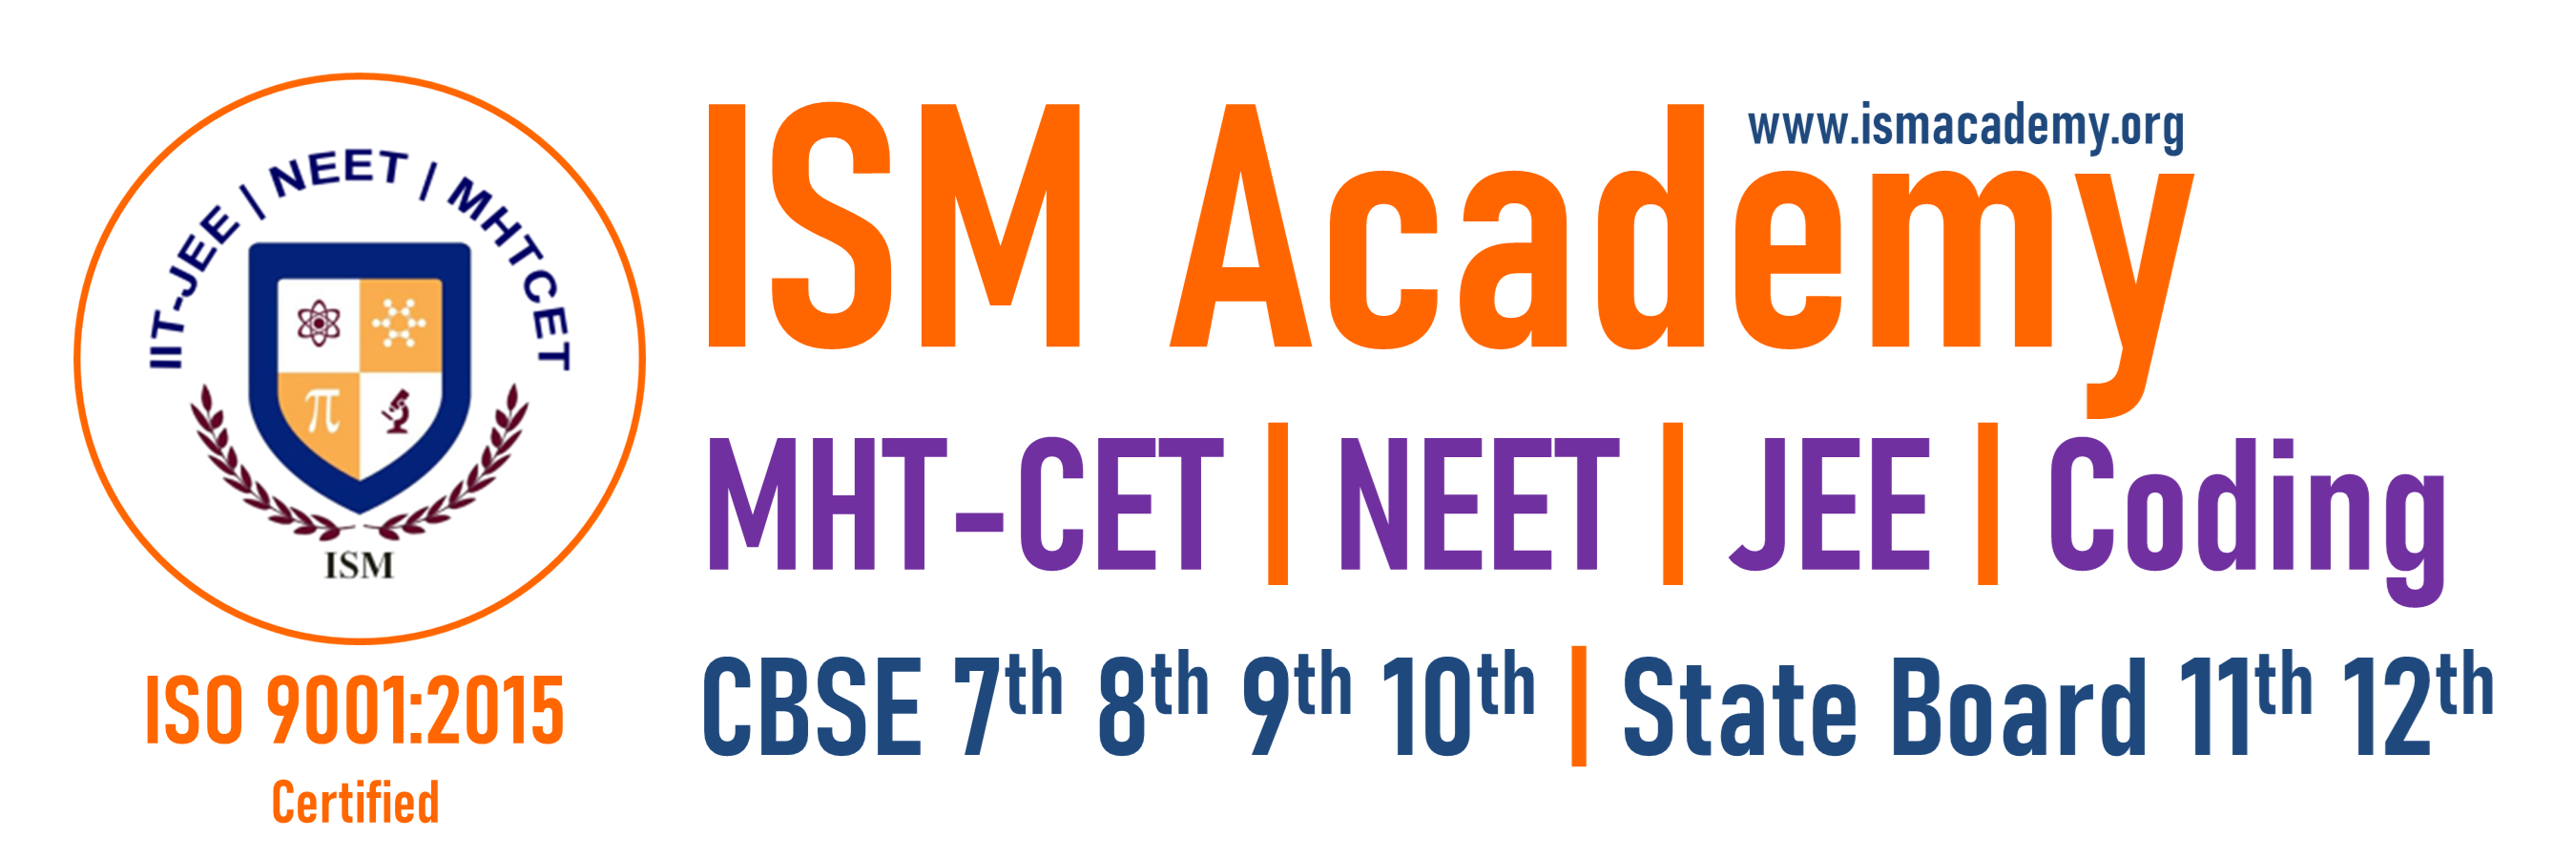 ISM Academy